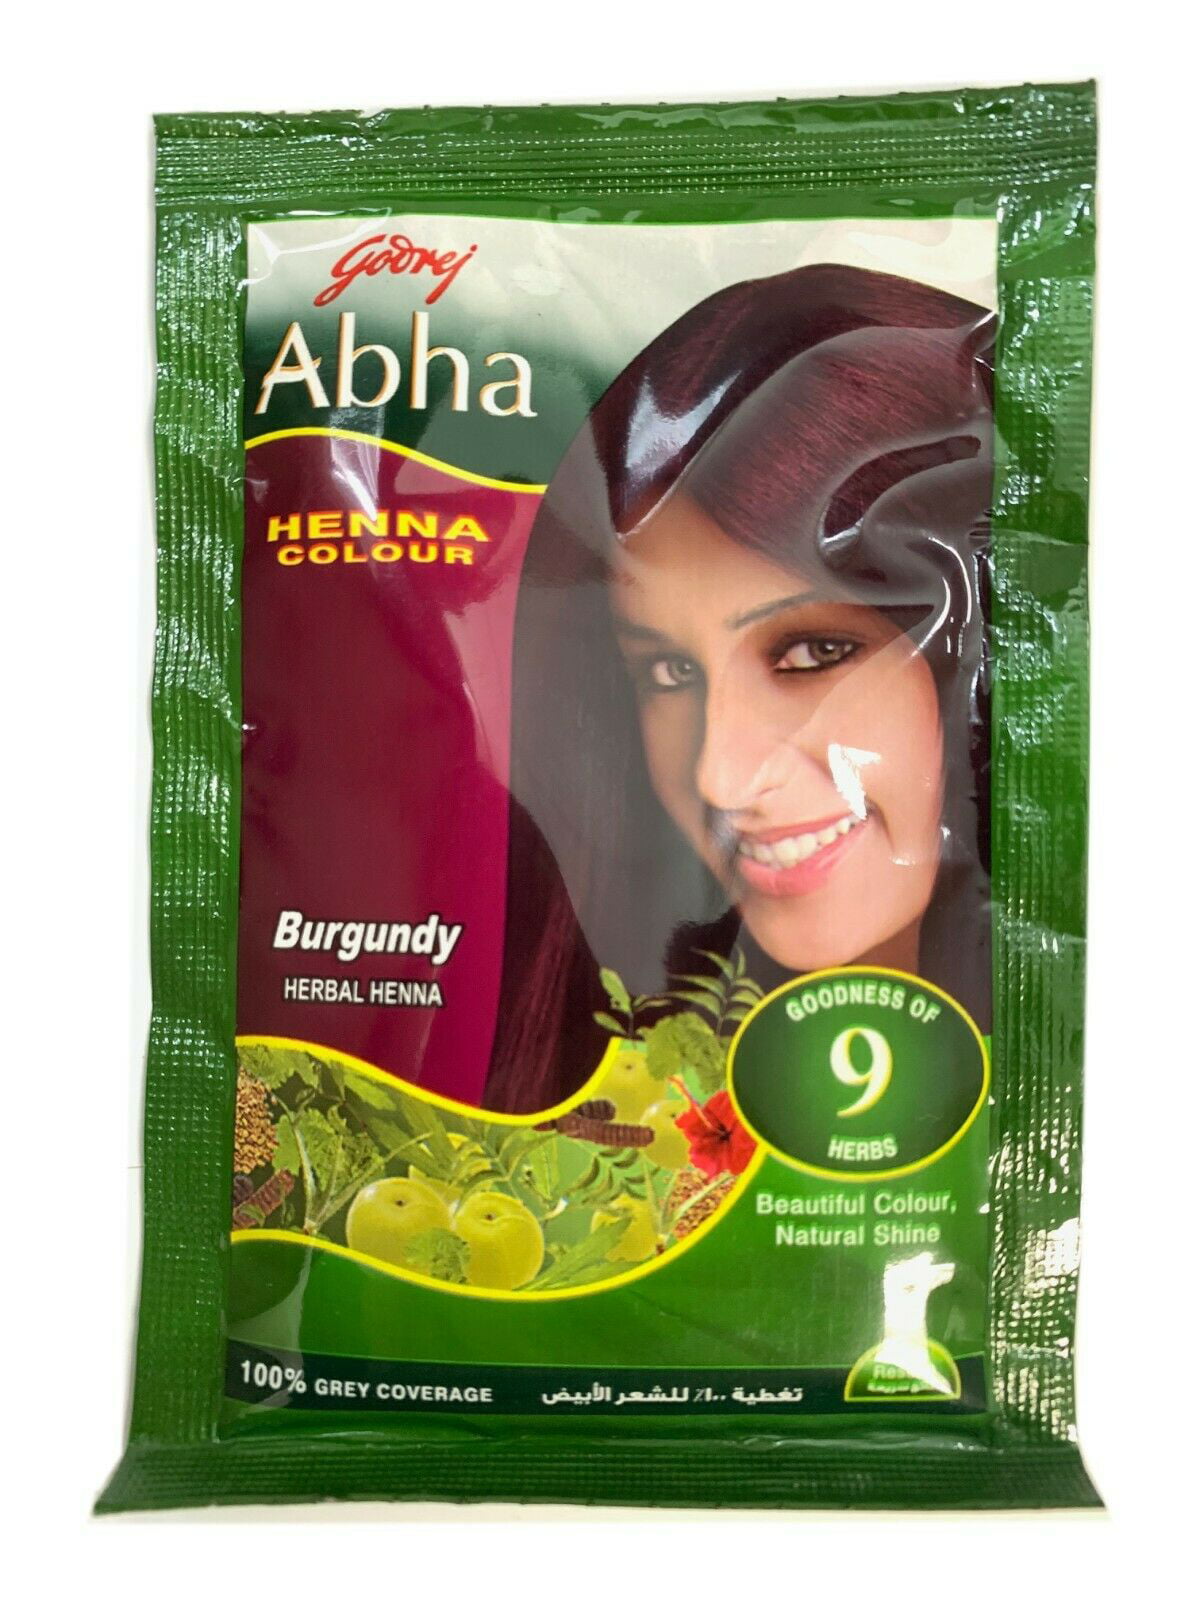 GODREJ Abha Henna Powder Best Hair Color Burgundy Natural Black Natural  Brown Shade Burgundy - 1 Application Sache... 